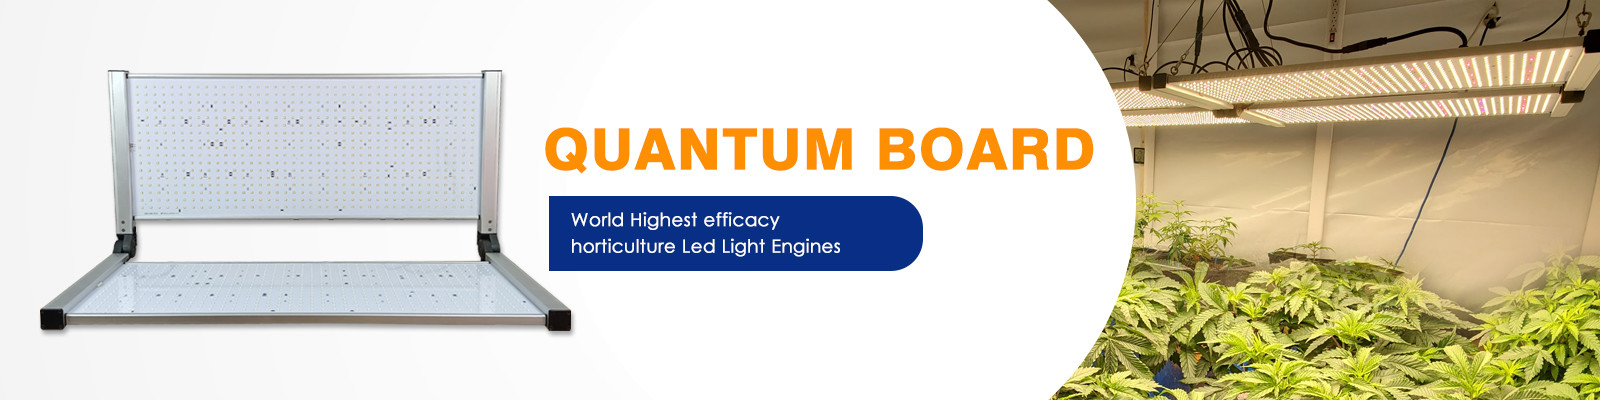 Quantum Board LED rosną światła